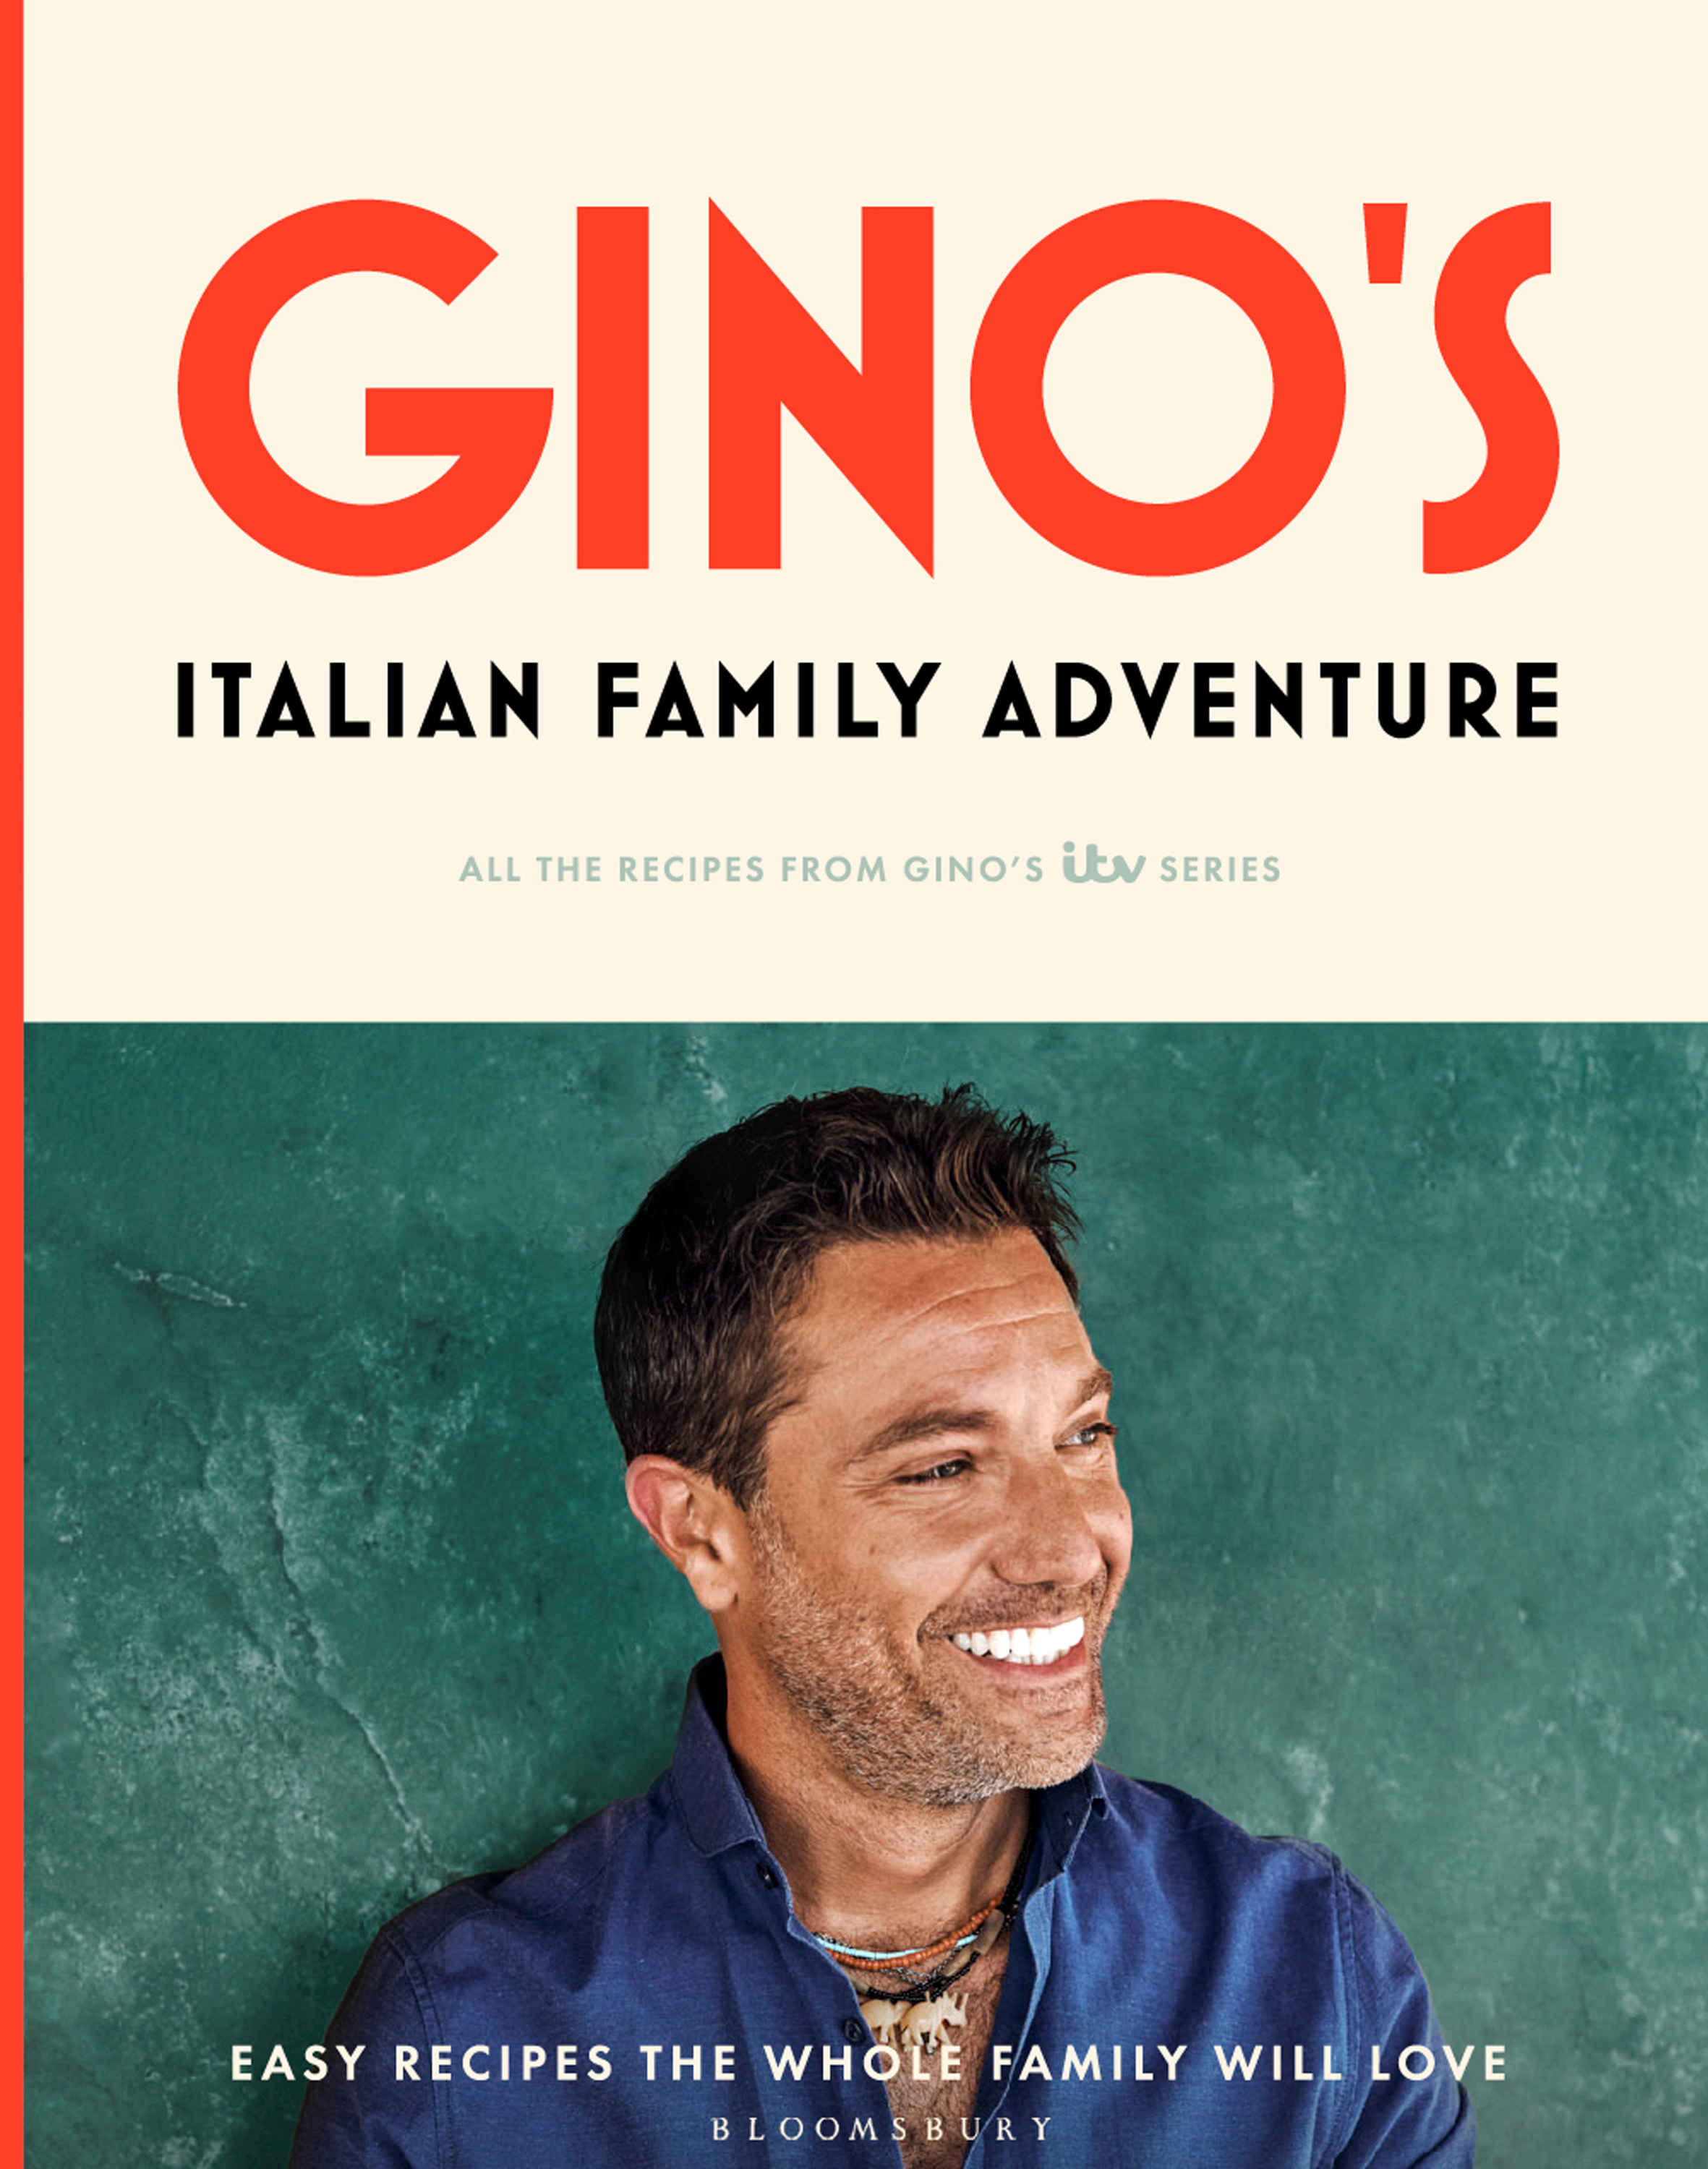 Gino's Italian Family Adventure: Easy Recipes the Whole Family will Love by Gino D’Acampo (published by Bloomsbury) (Haarala Hamilton/PA)